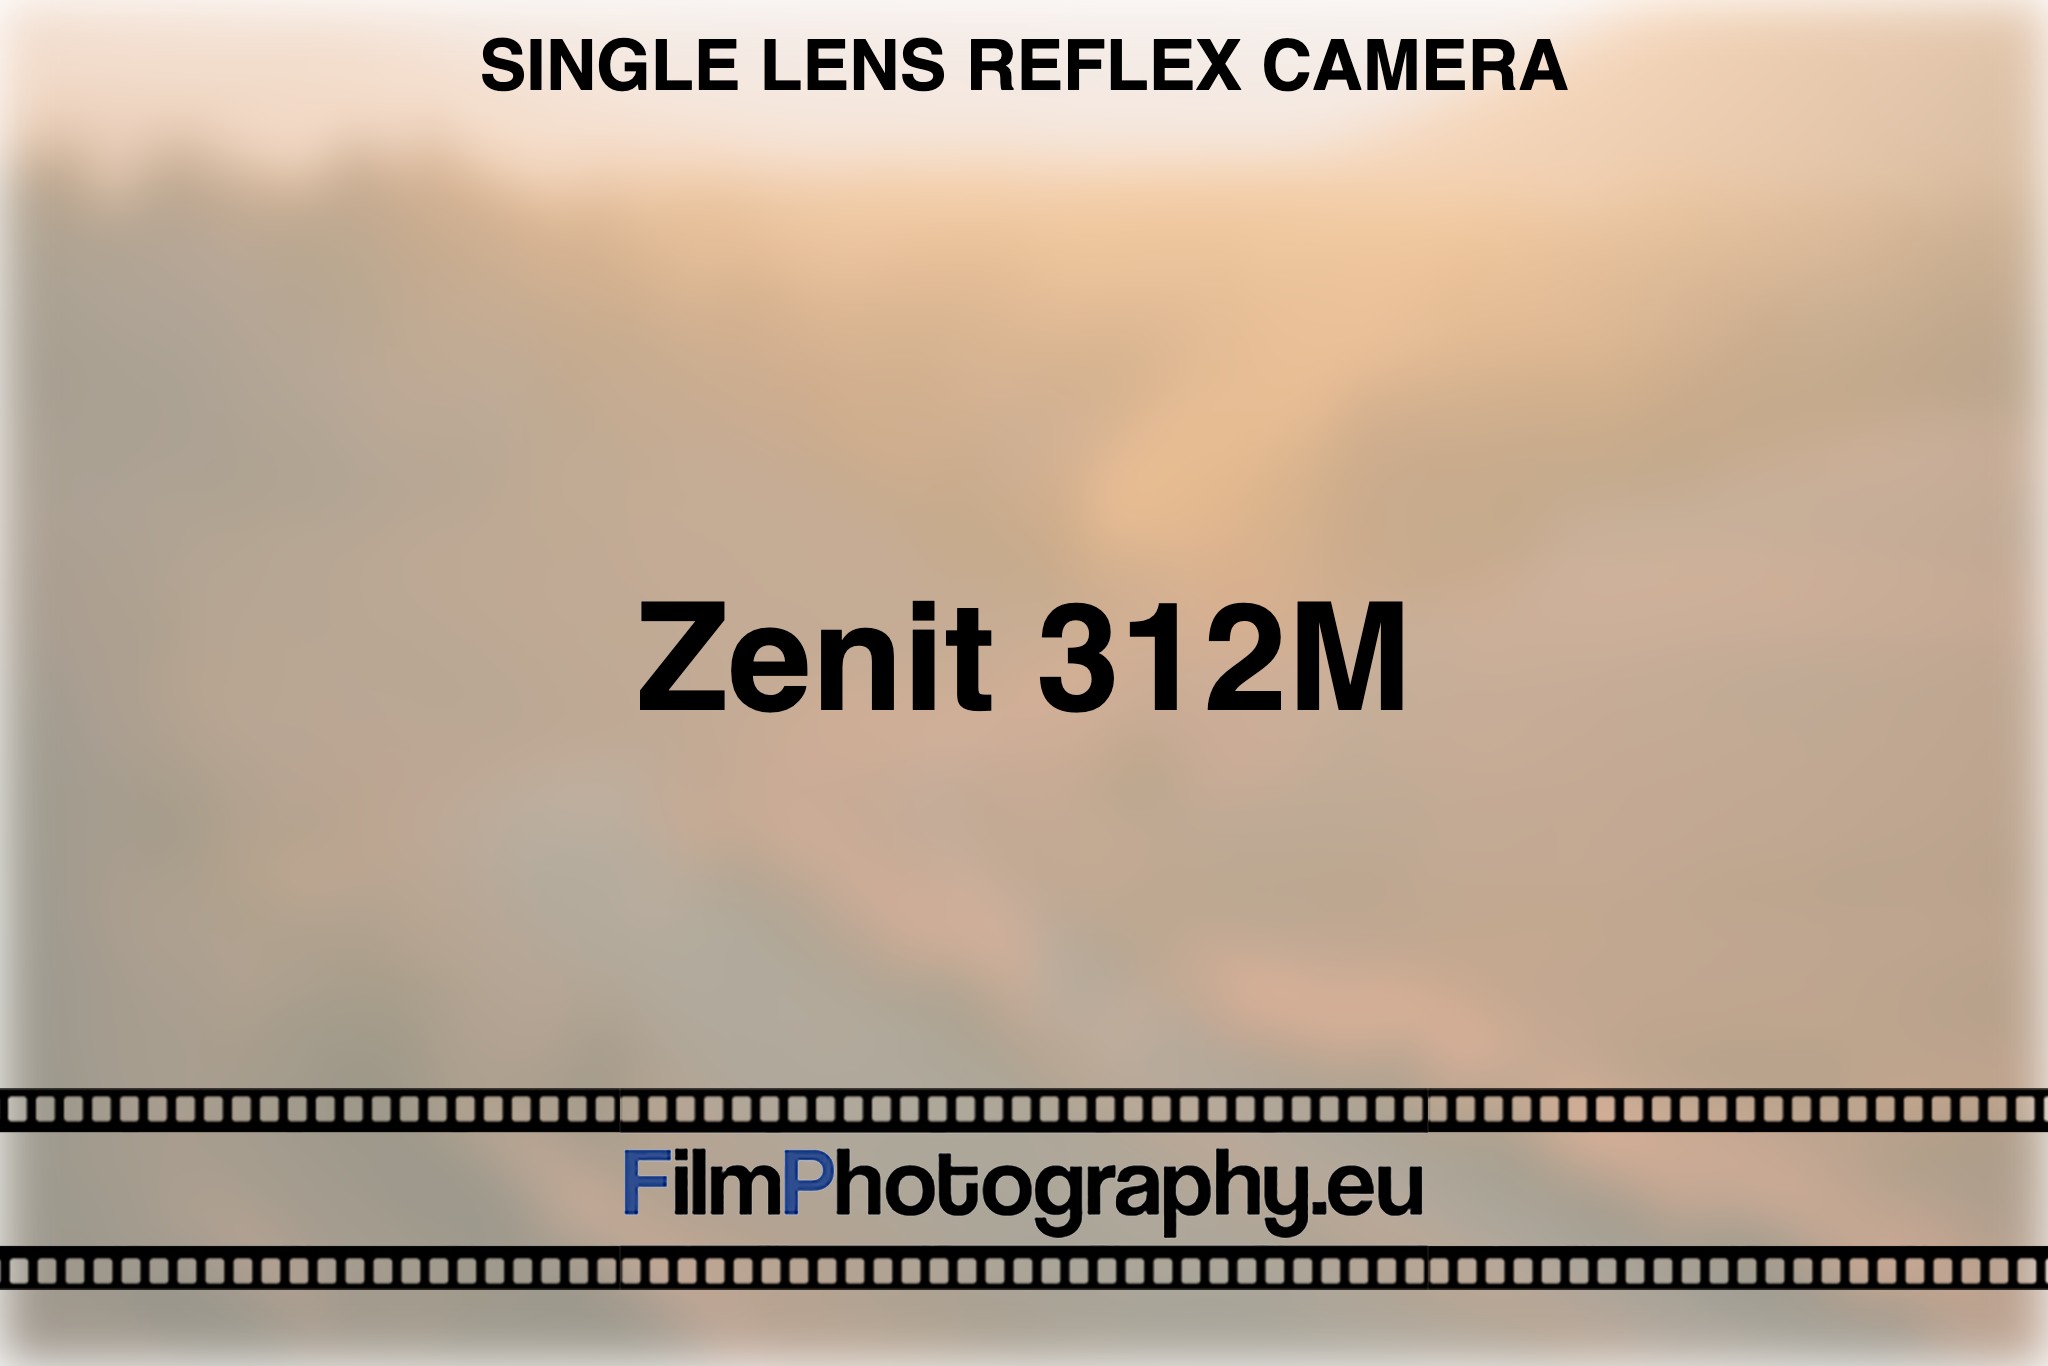 zenit-312m-single-lens-reflex-camera-bnv